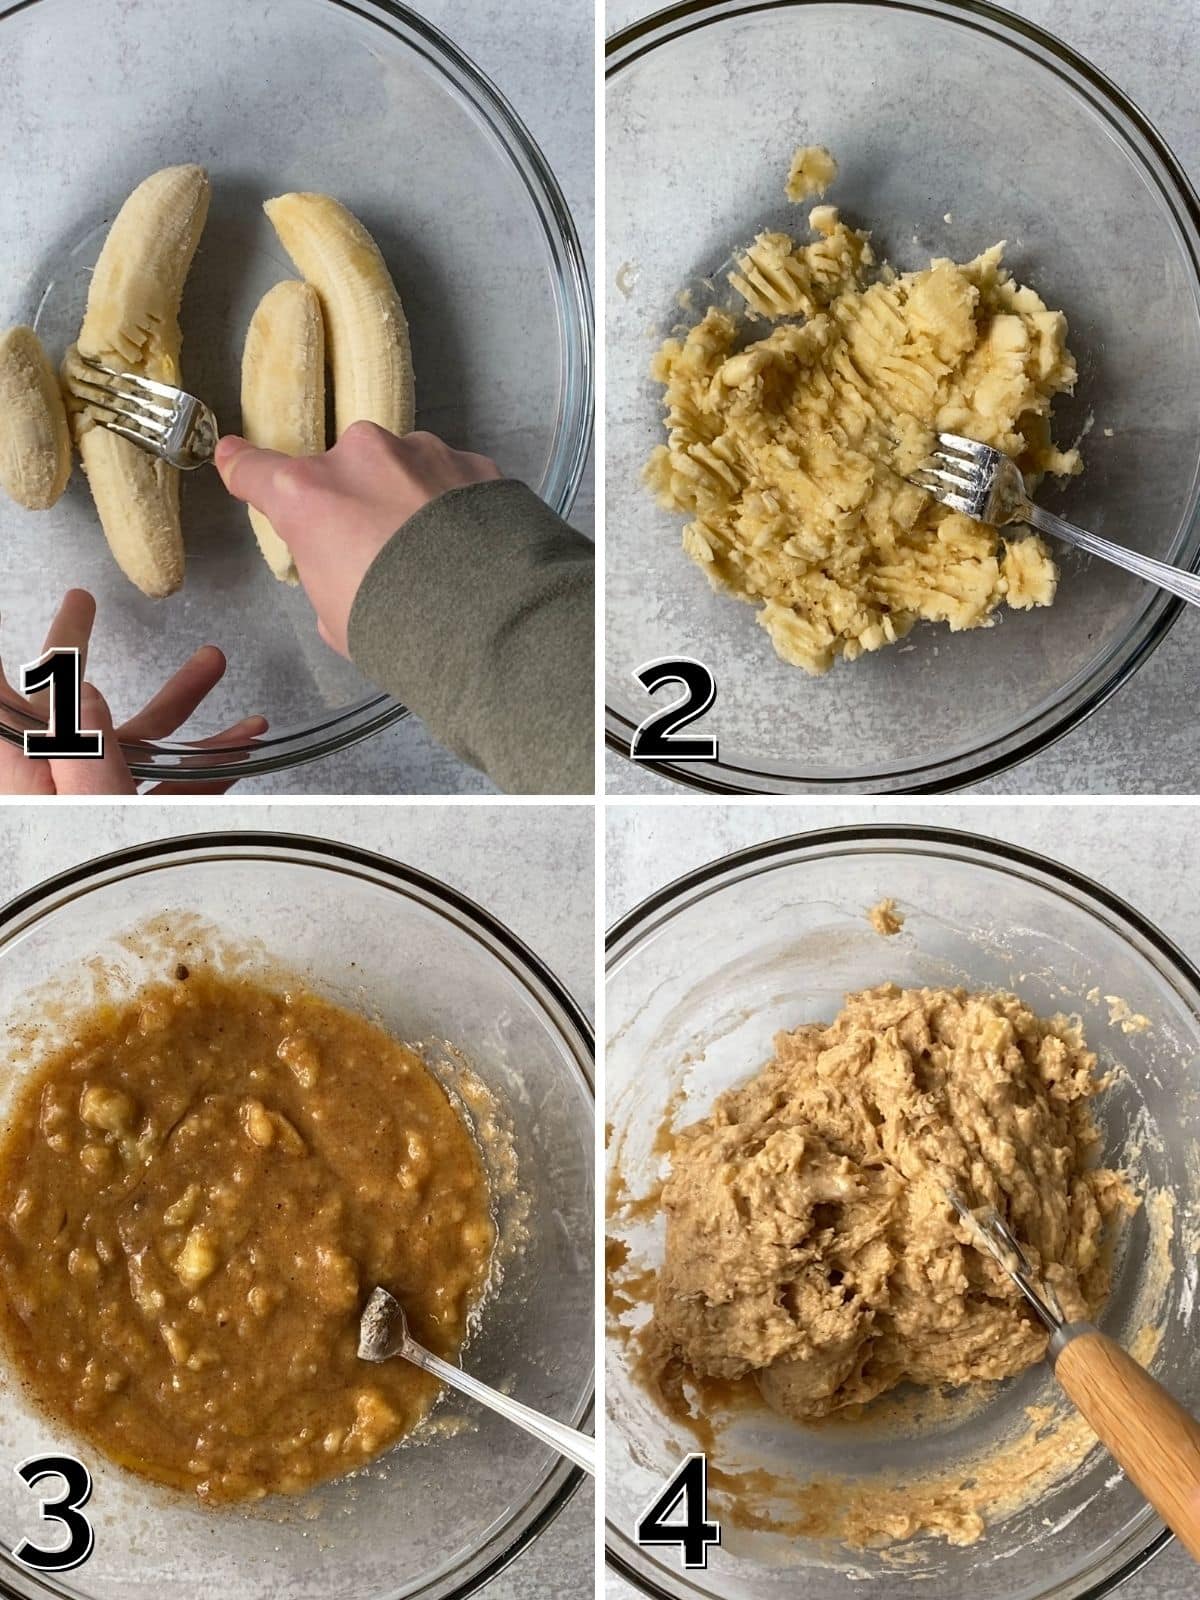 How to mash bananas and make muffin batter.